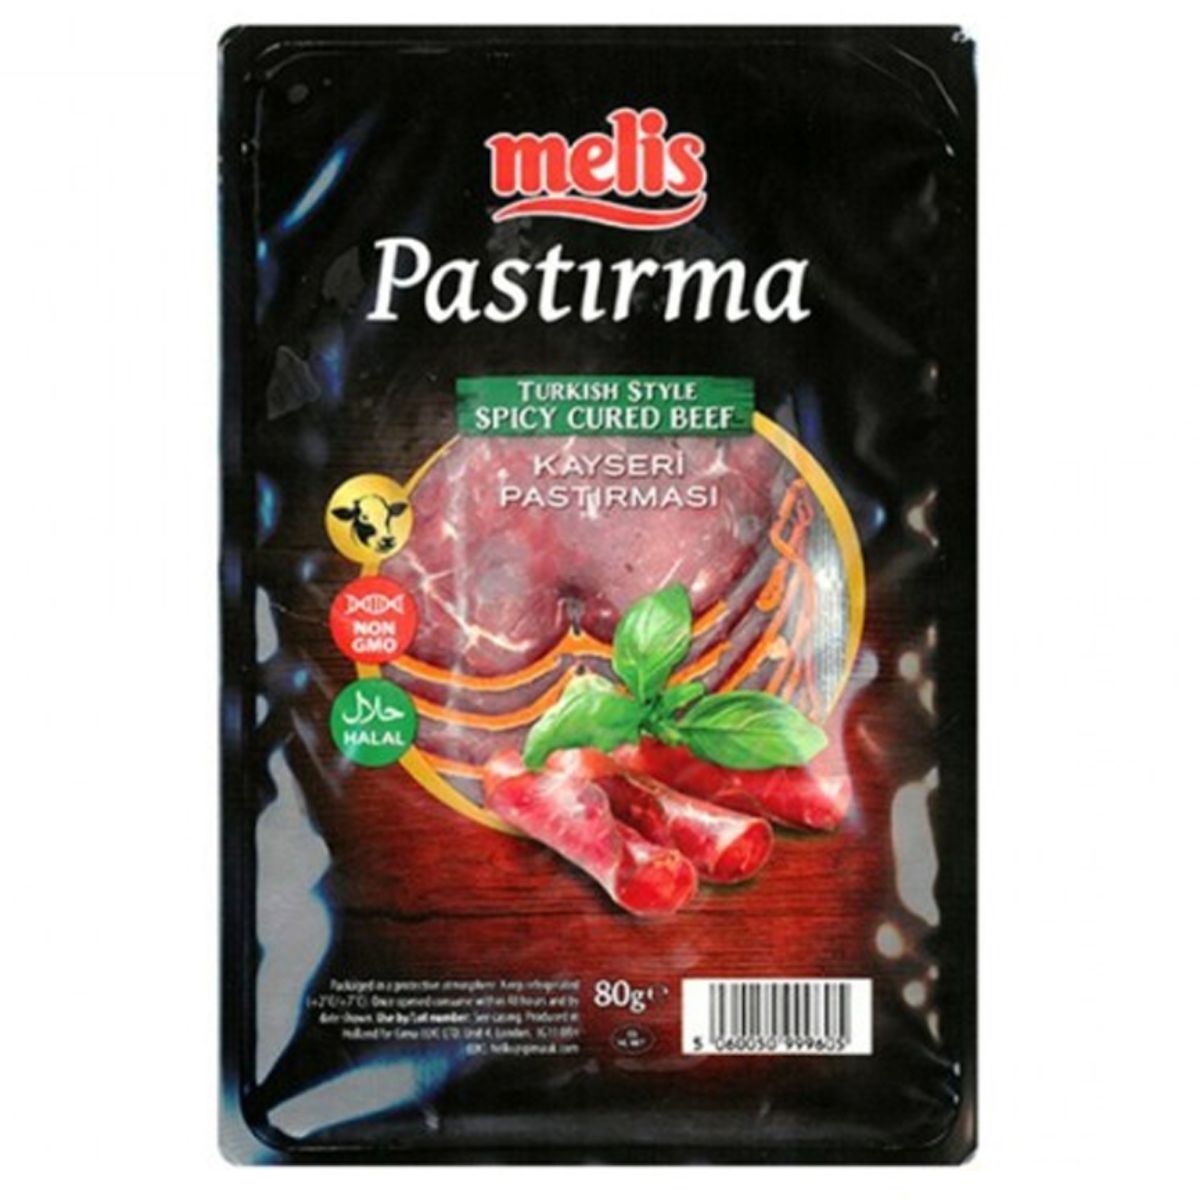 Melis - Pastirma Spicy Cured Beef Slices - 80g